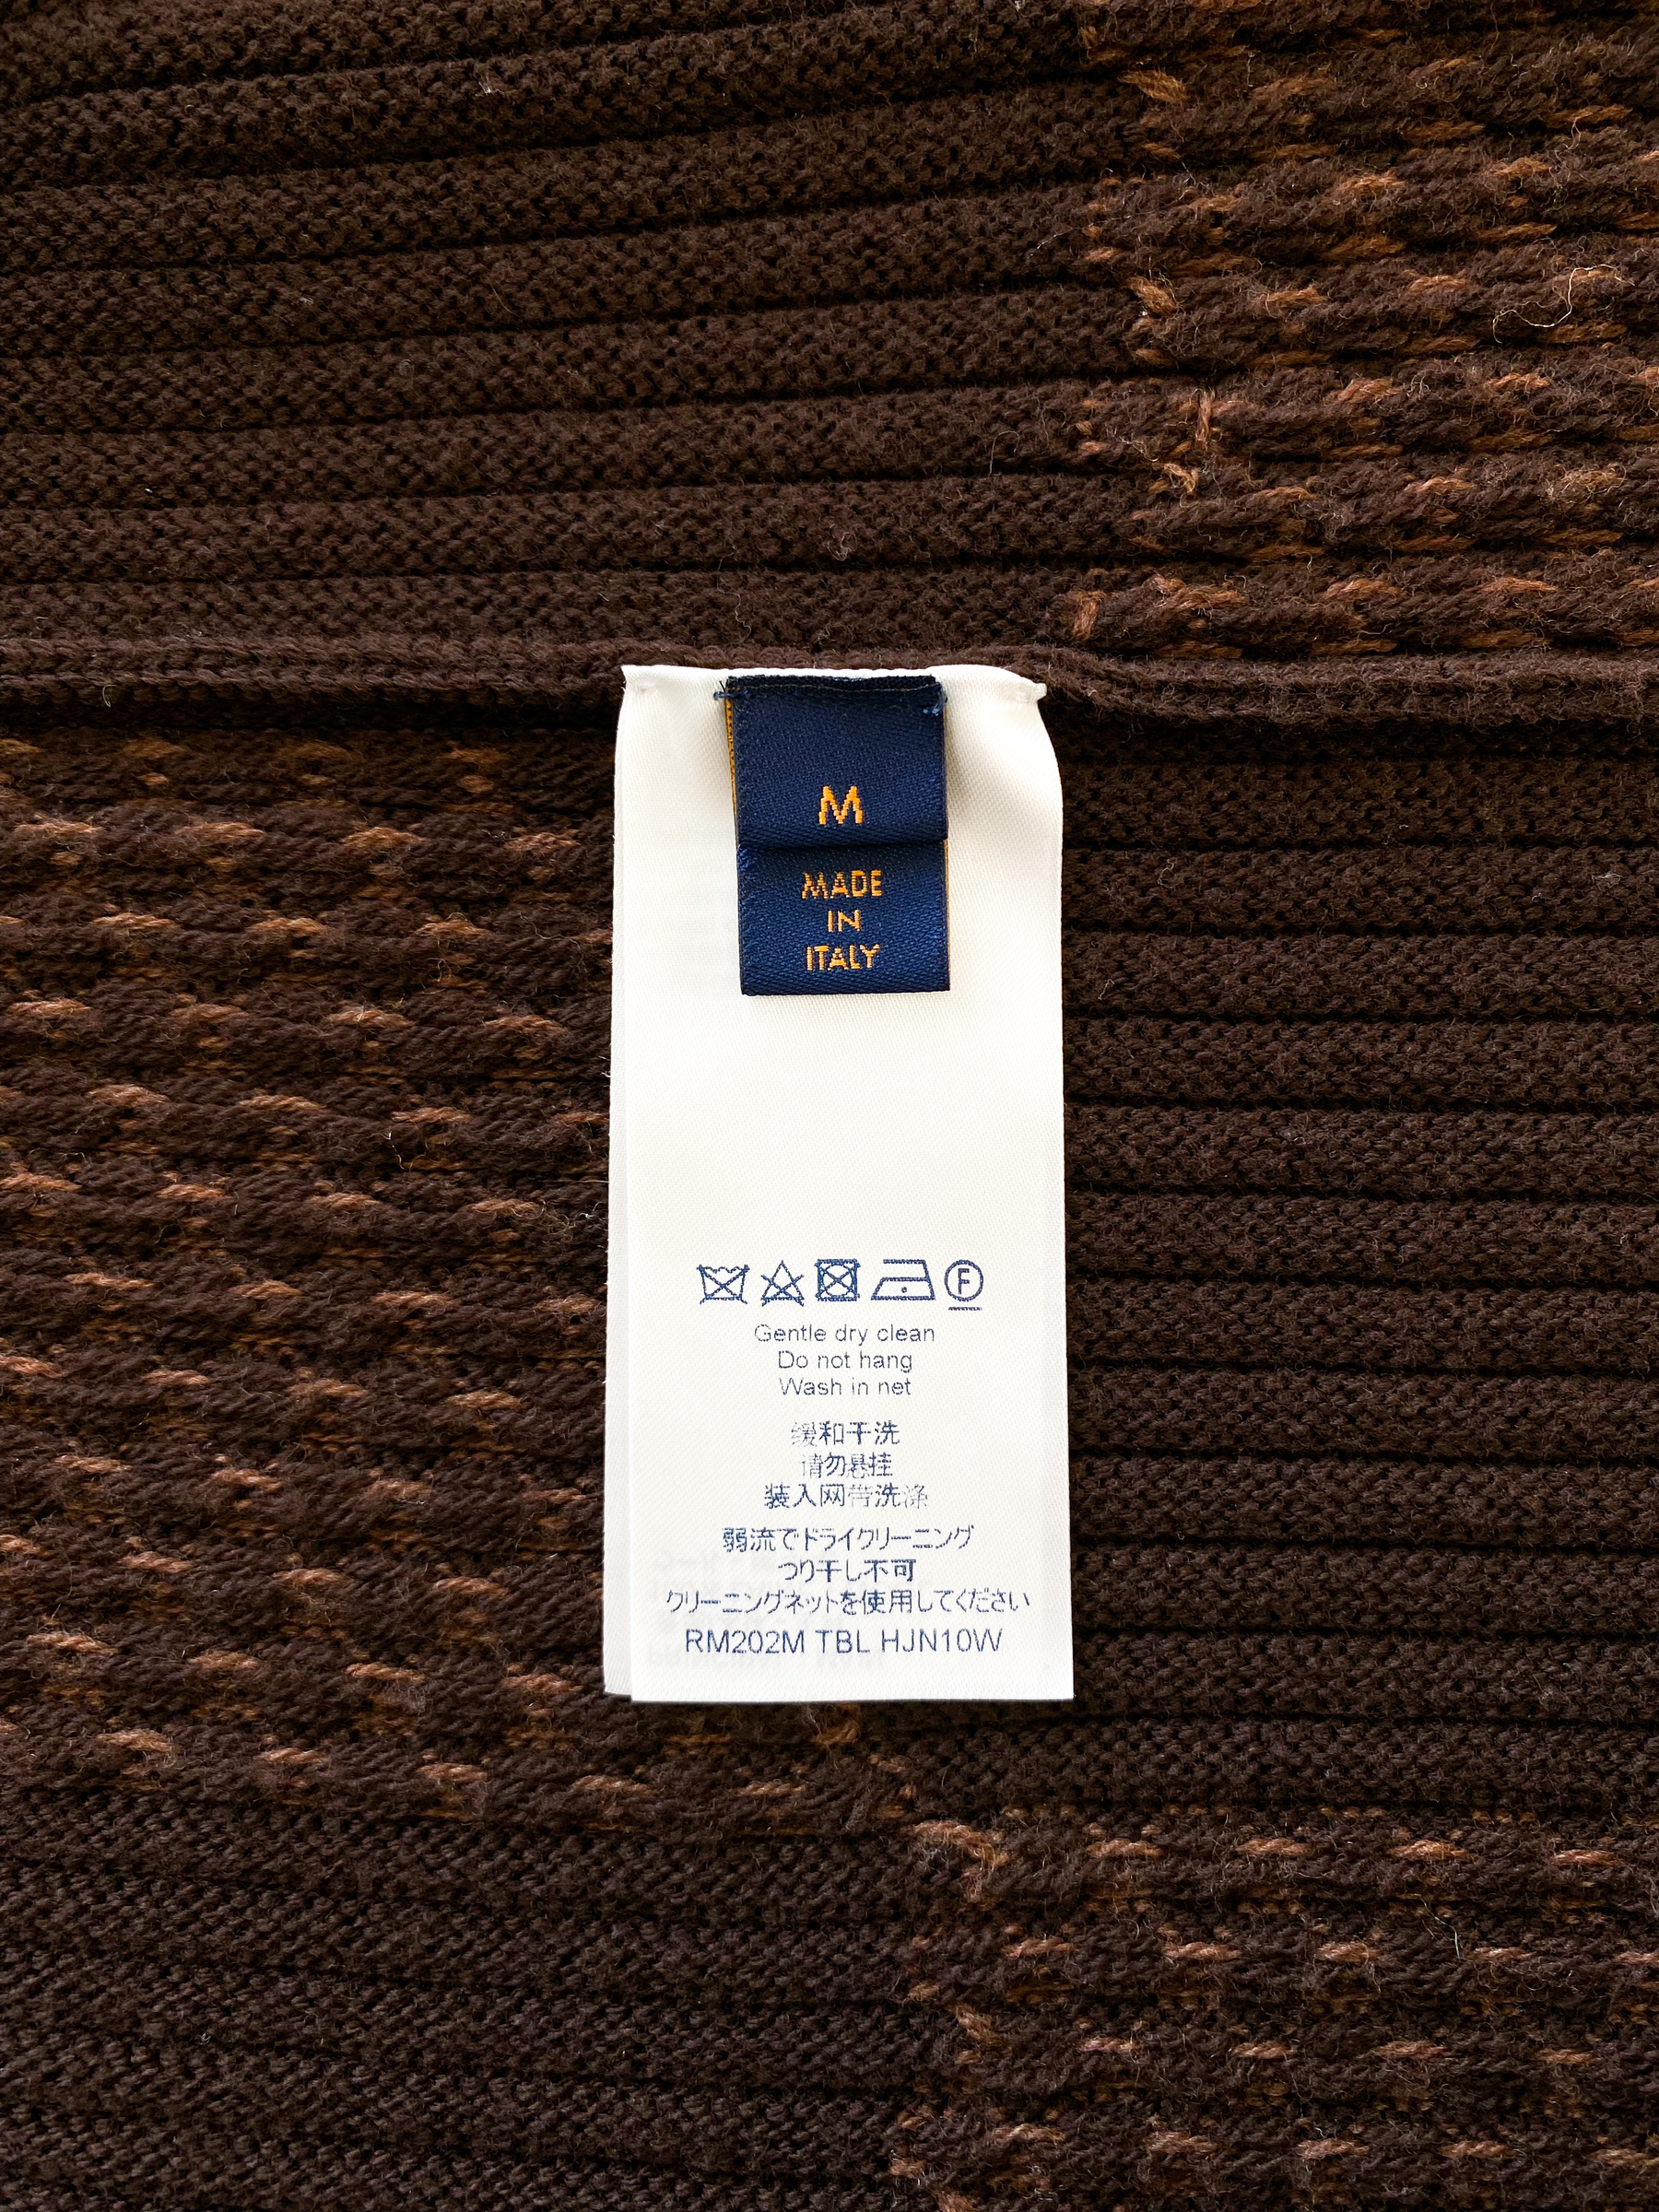 Louis Vuitton White Damier Zip Up Wool Cardigan – Savonches